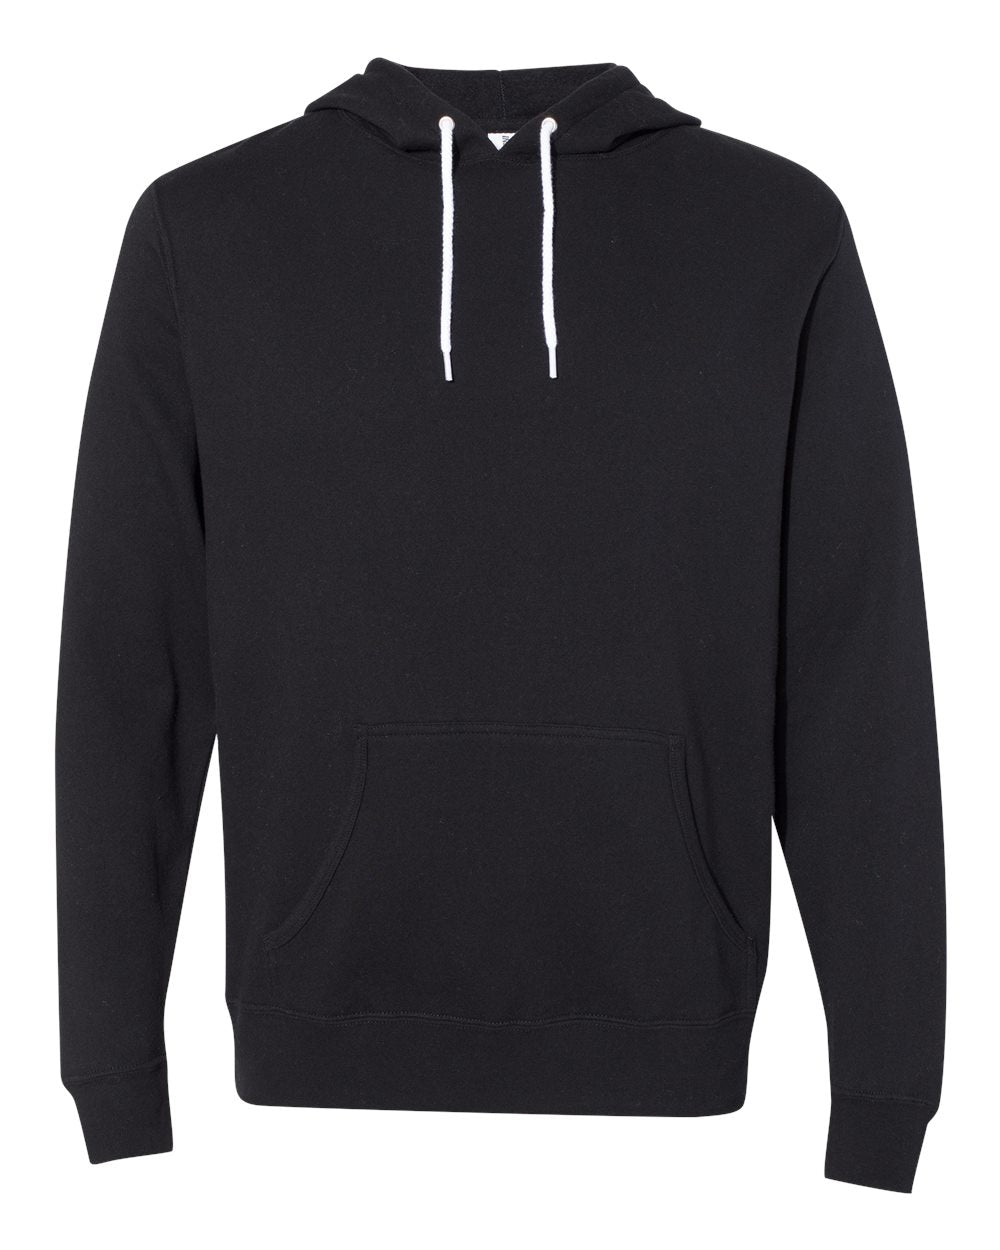 Lightweight Hooded Men's Sweatshirt - Independent Trading Co. AFX90UN